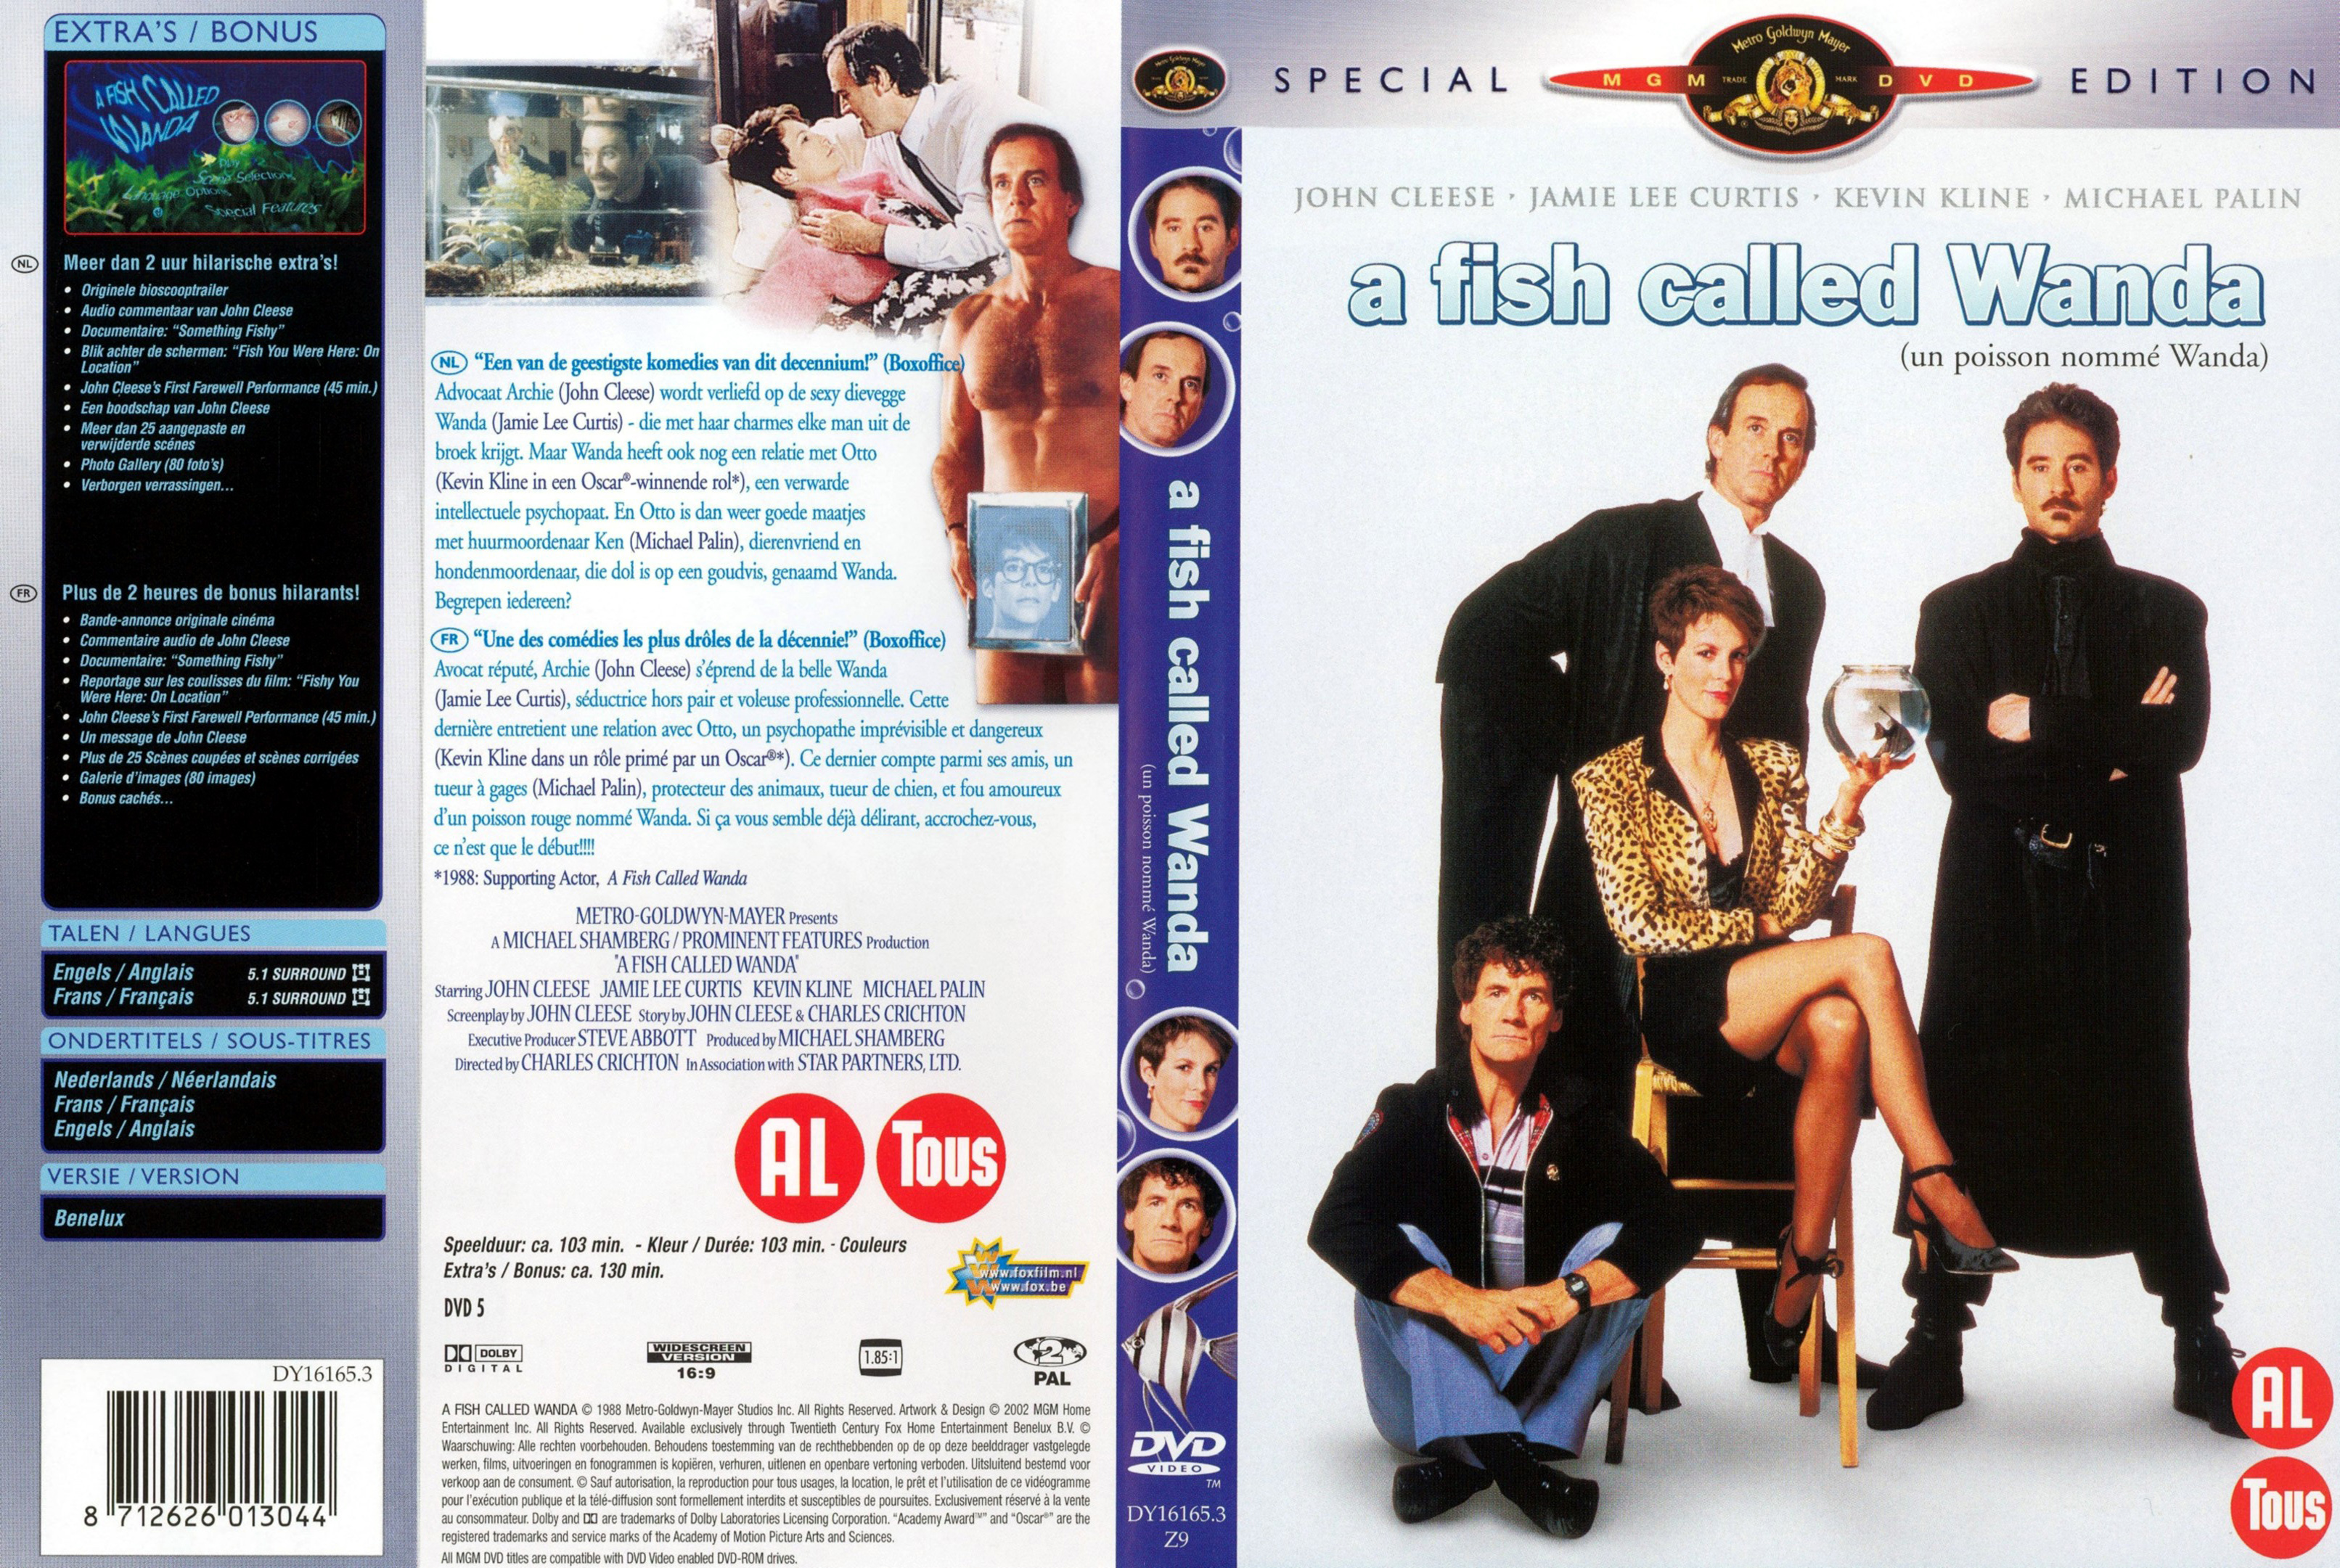 Jaquette DVD Un poisson nomm wanda - a fish called Wanda